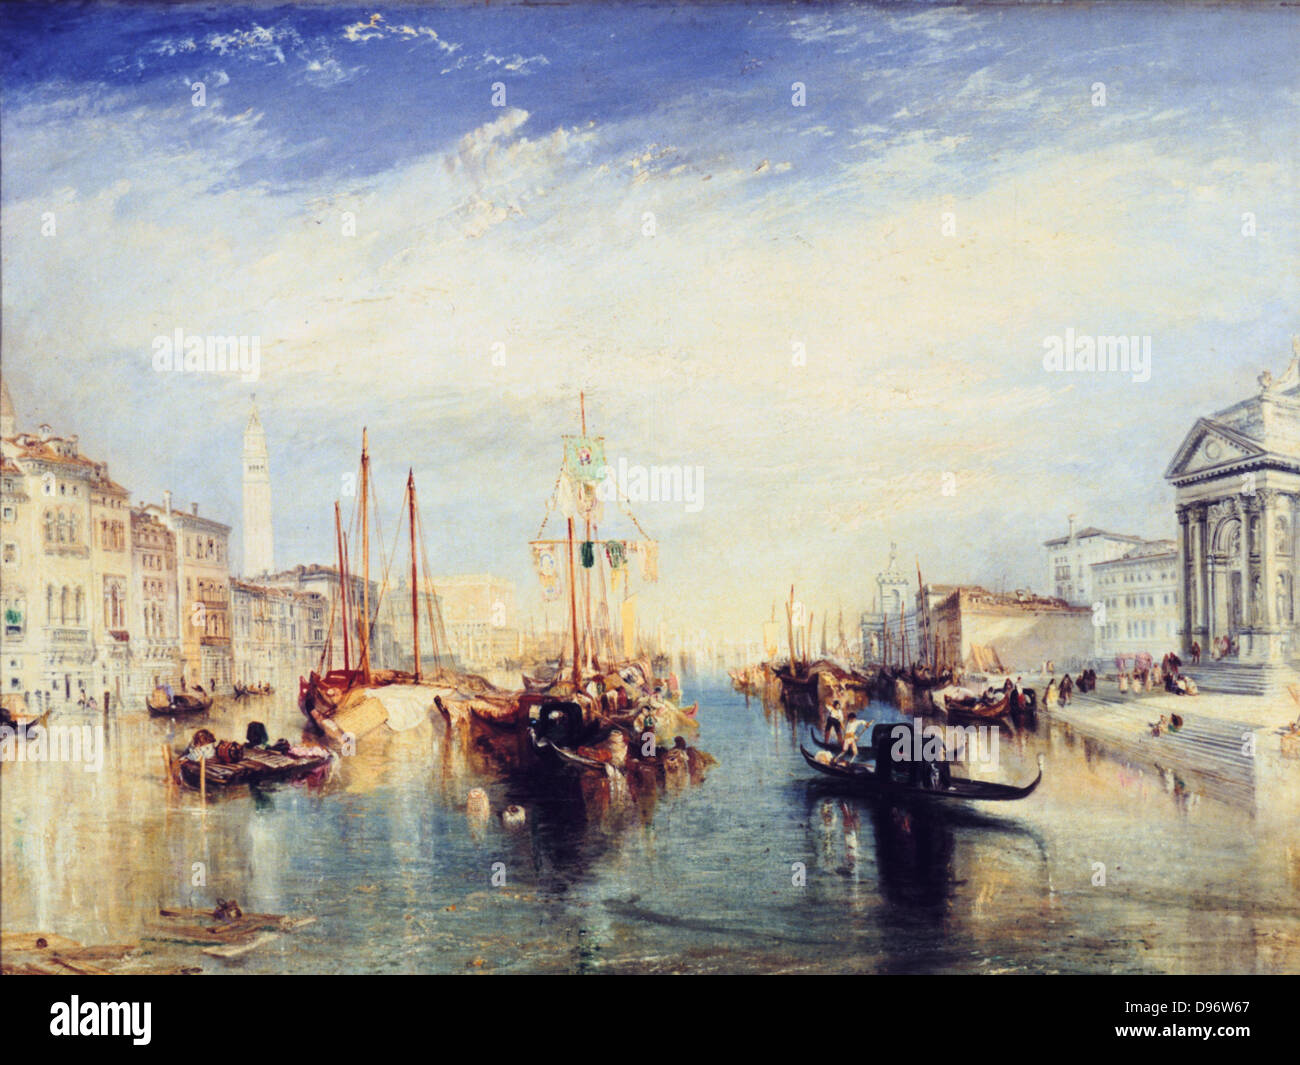 Le Grand Canal, Venise 1835 : Joseph Mallord William Turner (1775-1851) l'artiste anglais. Huile sur toile. Banque D'Images